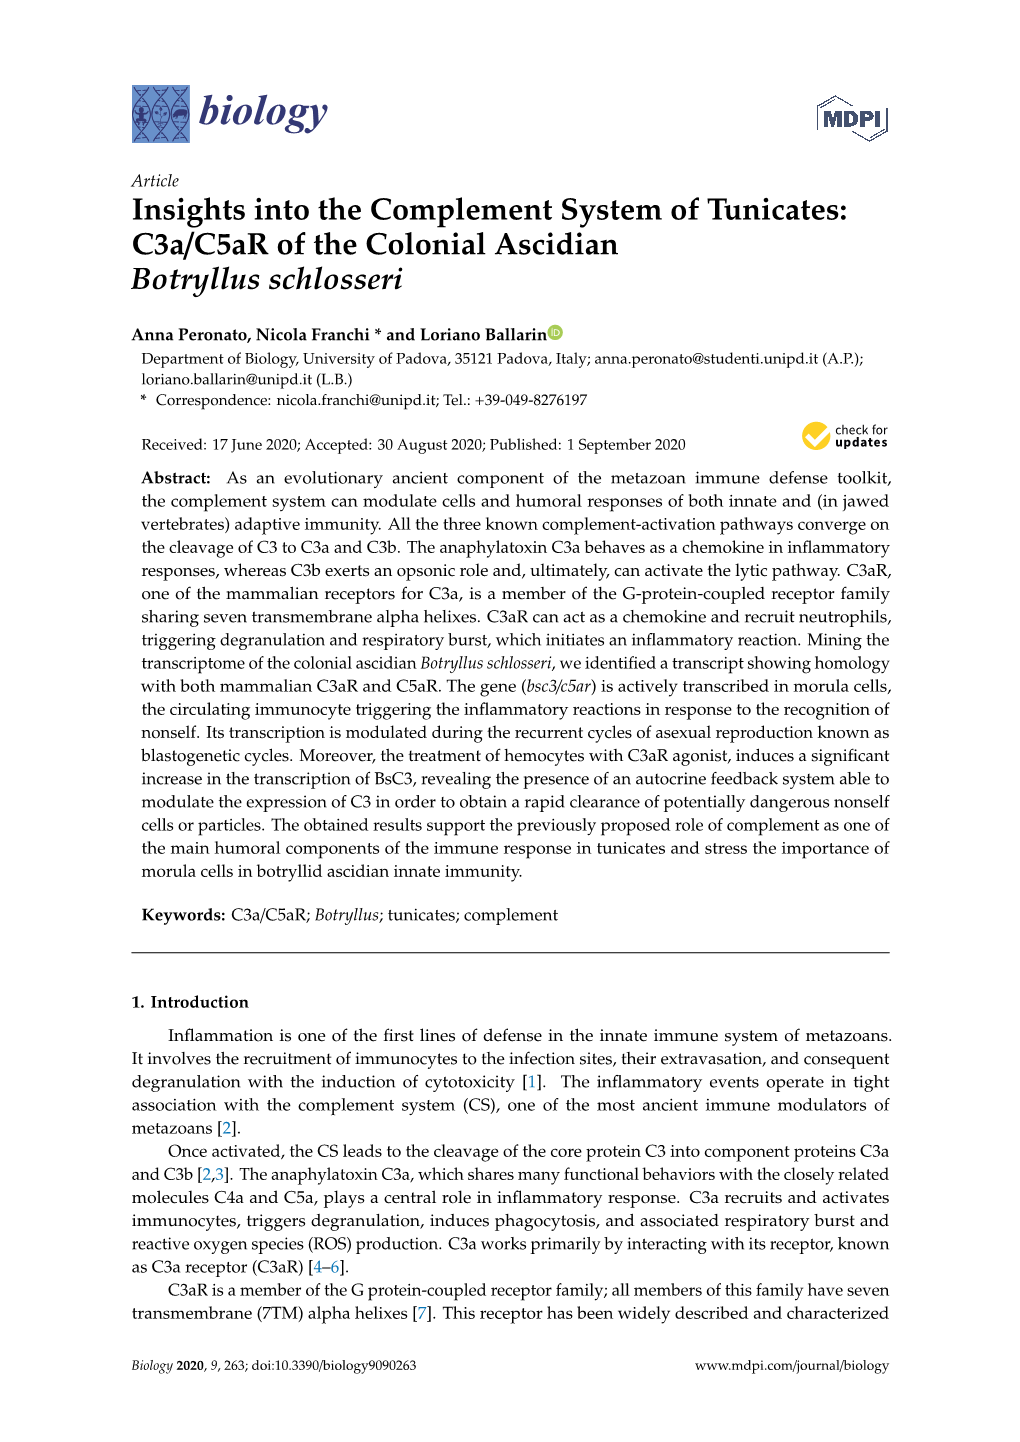 C3a/C5ar of the Colonial Ascidian Botryllus Schlosseri